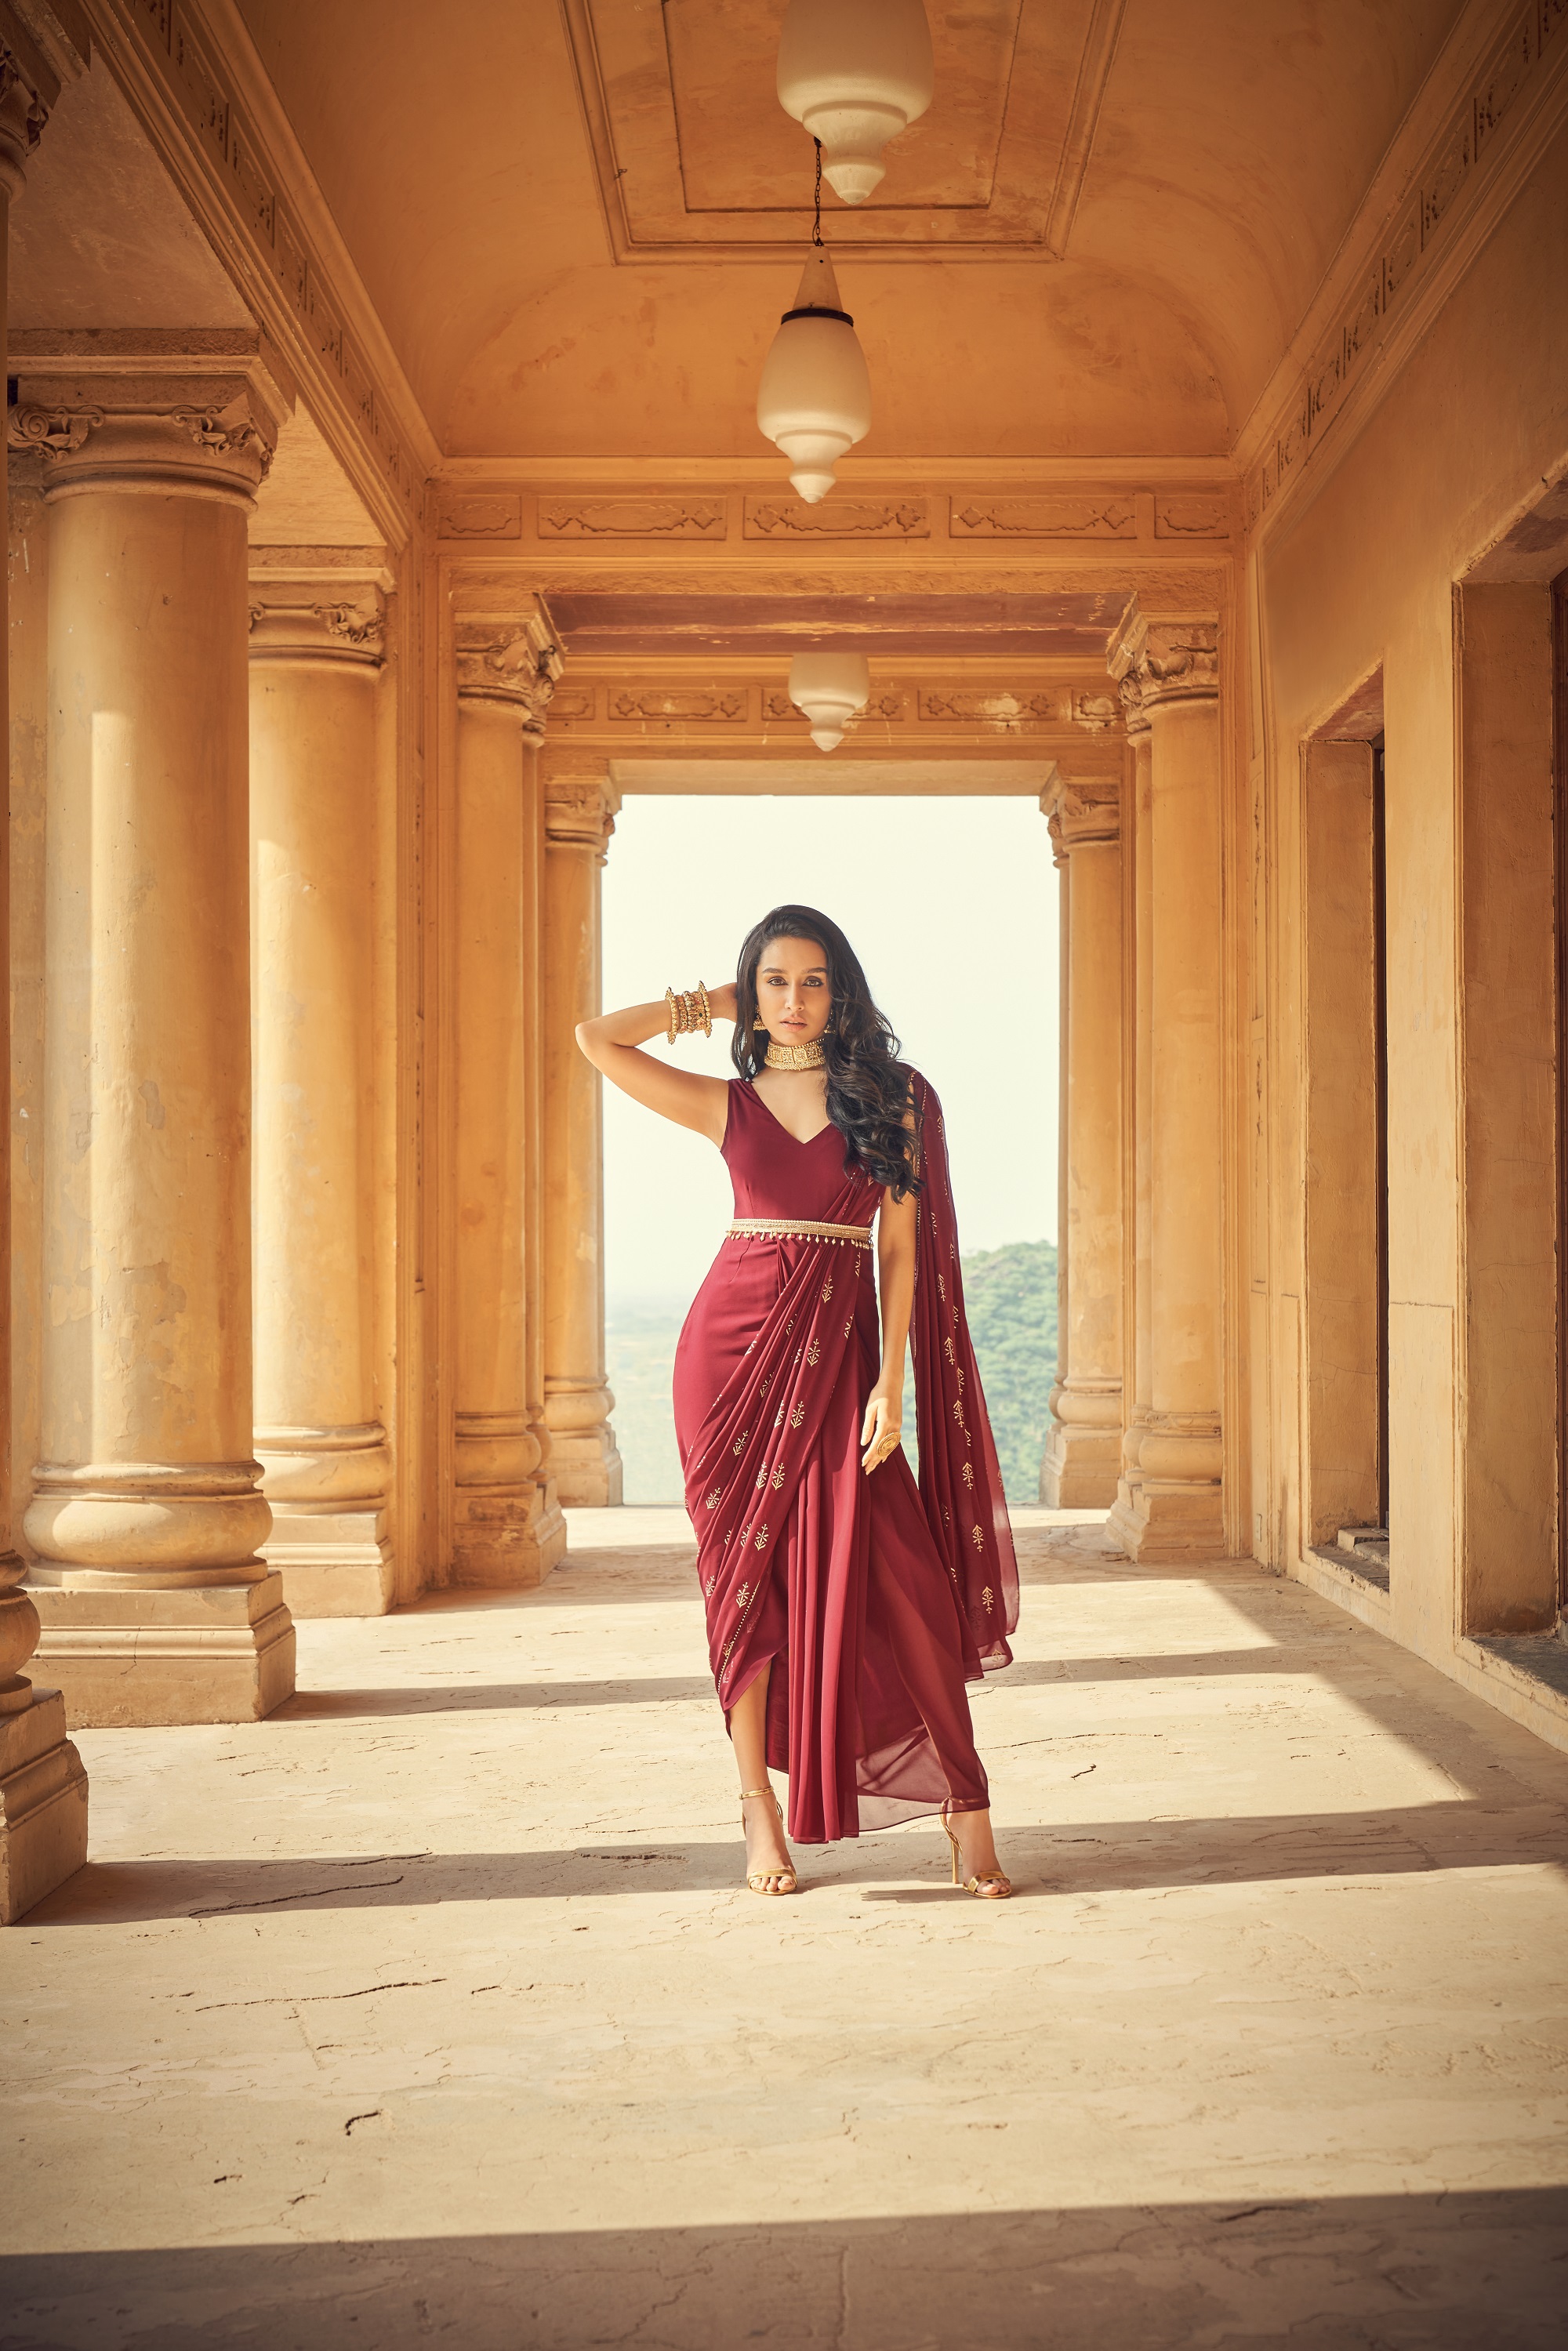 Modern Indian wear brand, Indya announces Bollywood star Shraddha Kapoor as its first brand ambassador